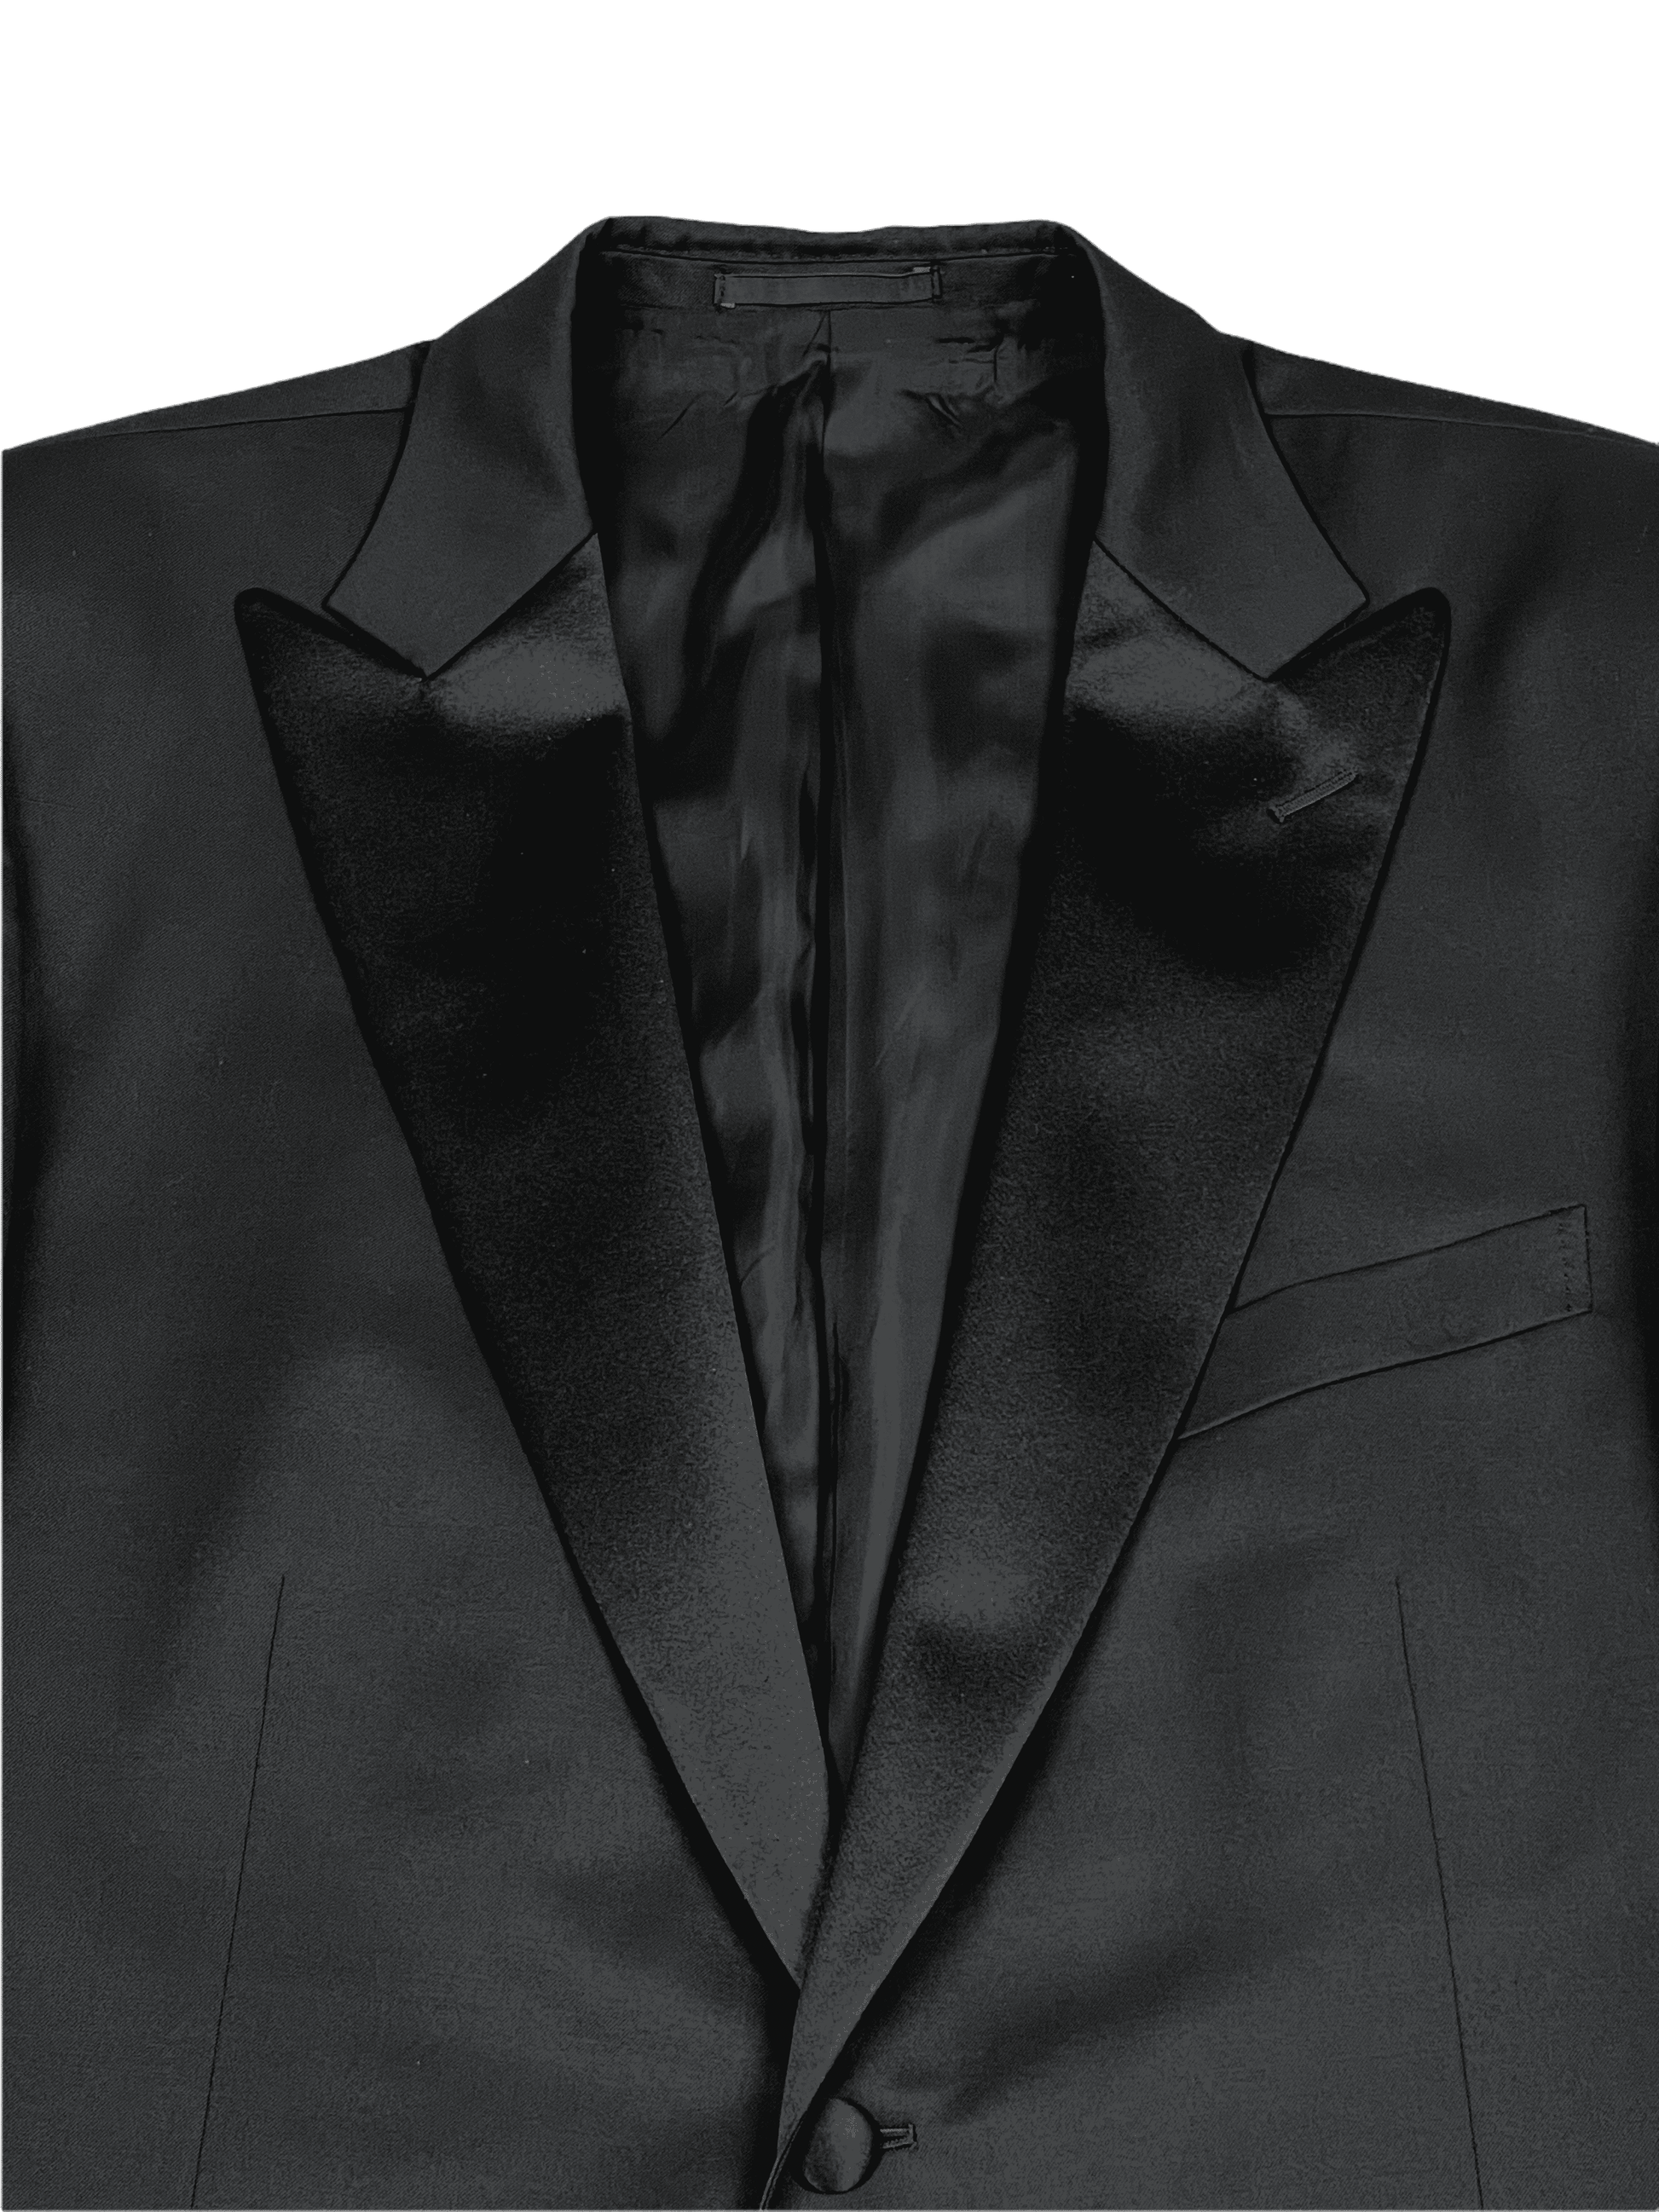 Z Zegna Black Wool Tuxedo 46R – Genuine Design Luxury Consignment